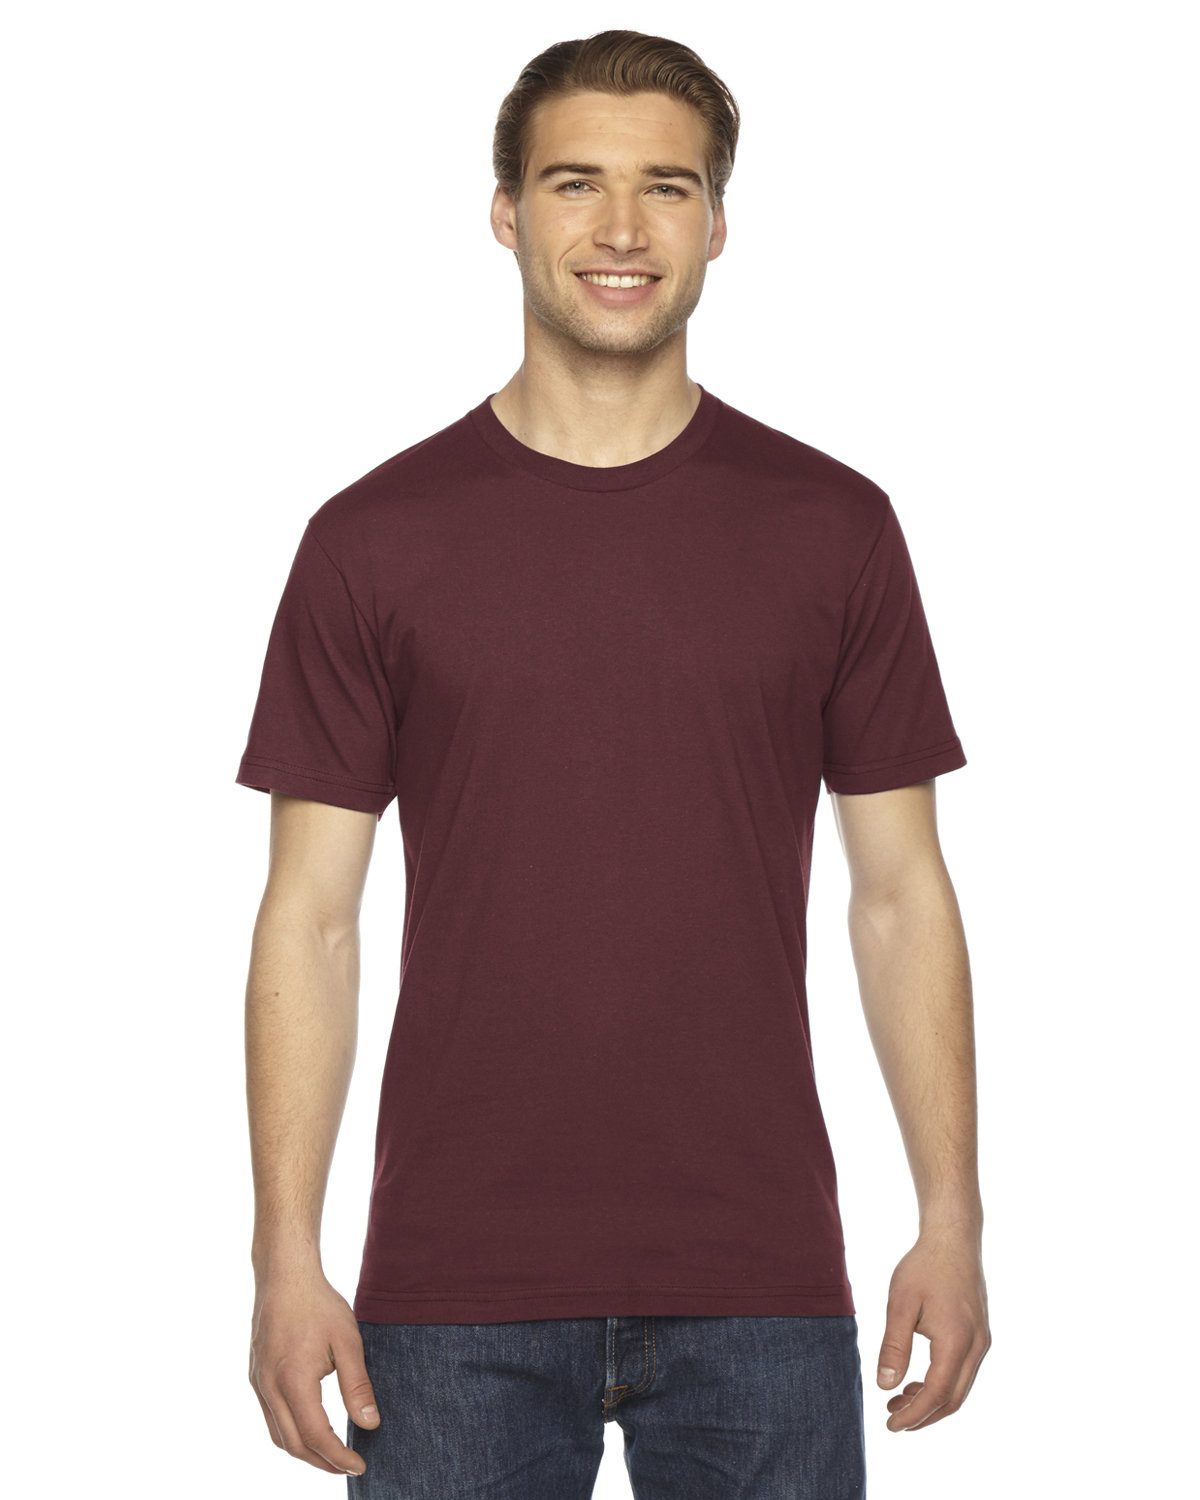 American Apparel Unisex Fine Jersey Short-Sleeve T-Shirt TRUFFLE 